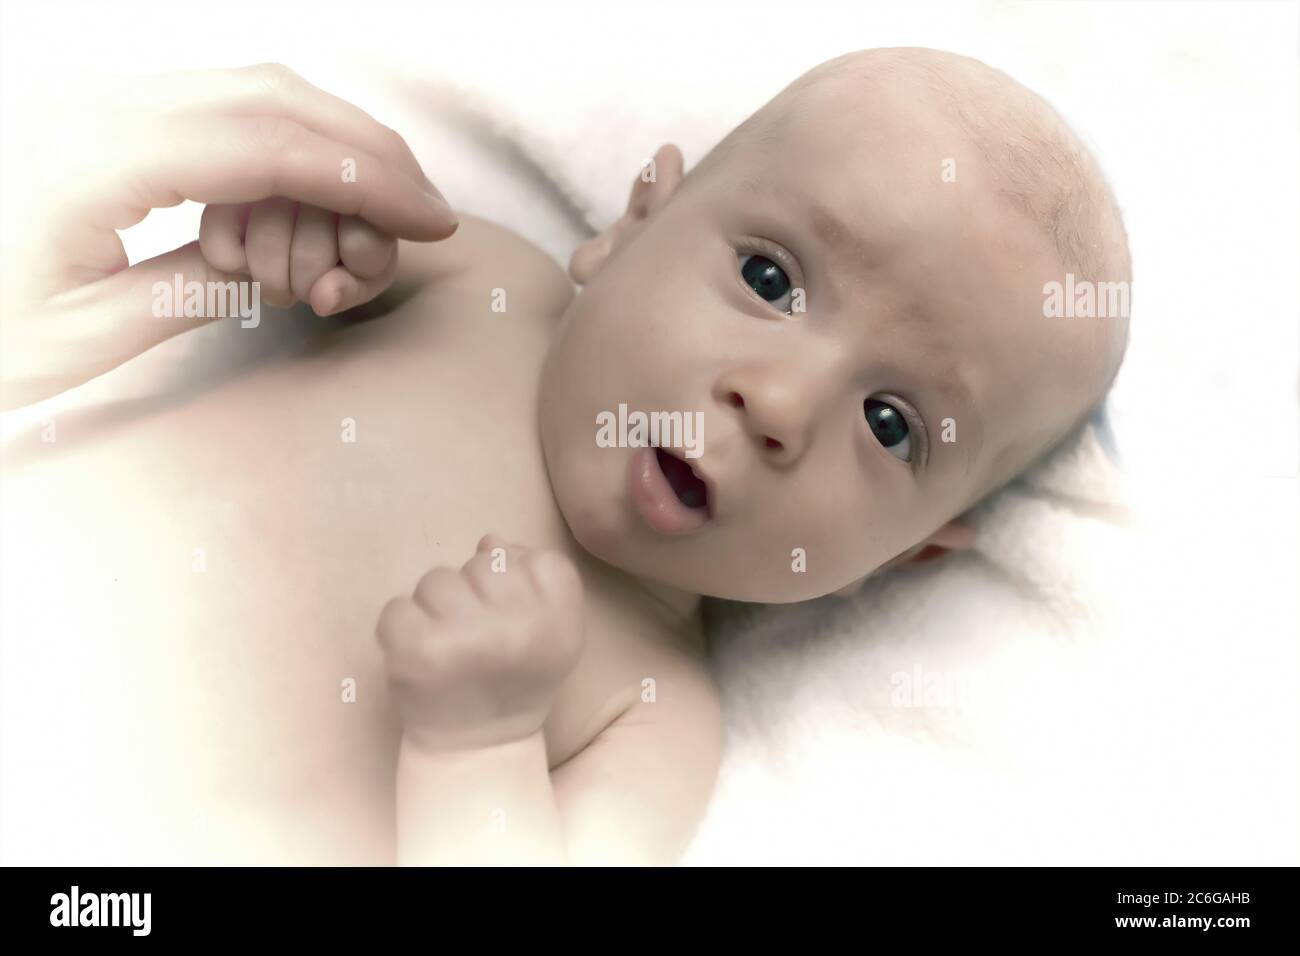 Sweet newborn in close up photo Stock Photo